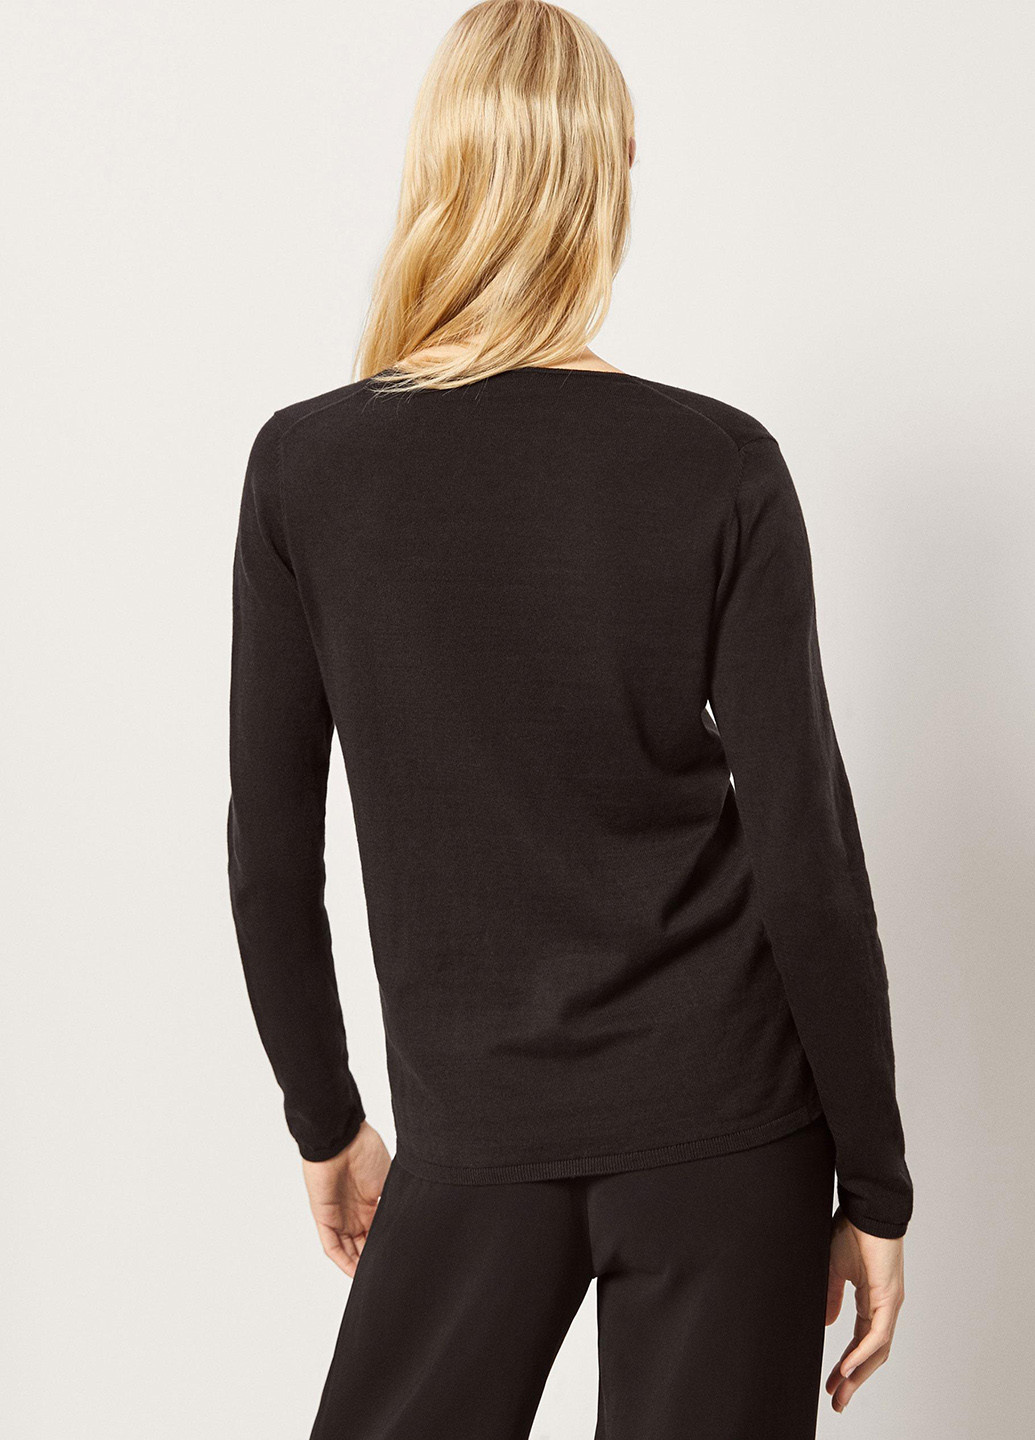 Черный демисезонный пуловер пуловер Massimo Dutti